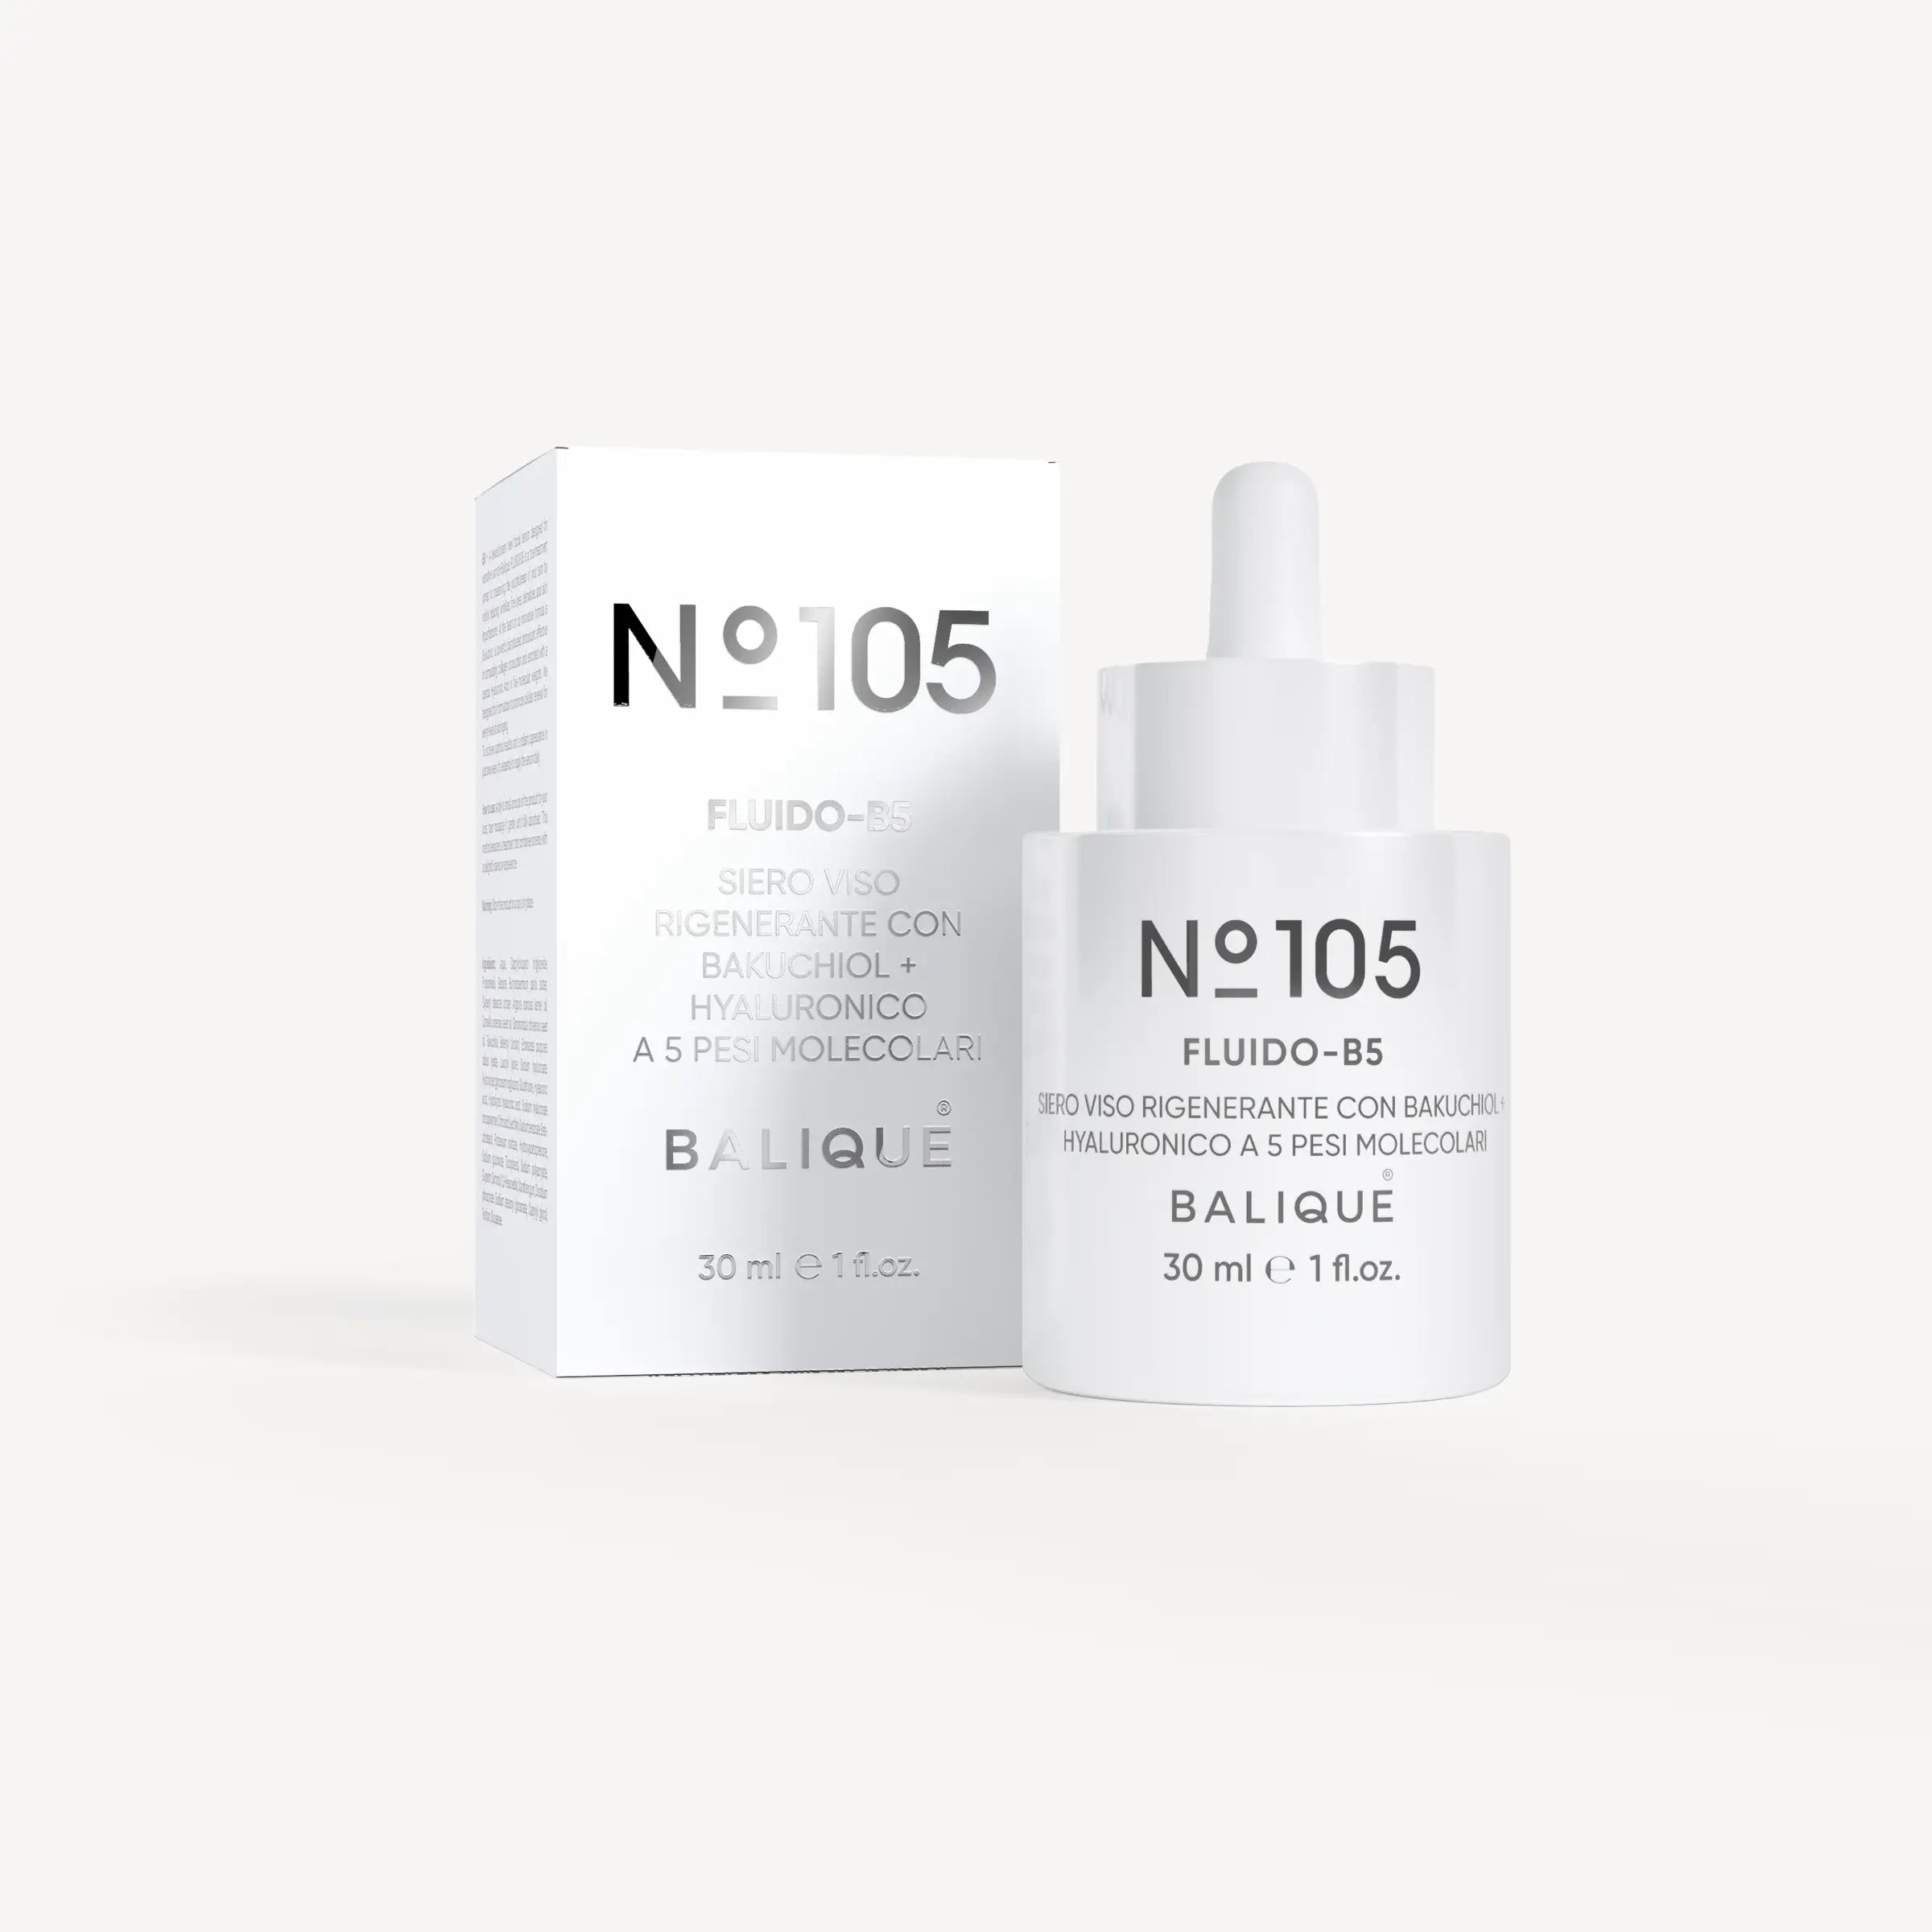 N°105 - FLUIDO B5 - Siero viso rigenerante con bakuchiol + hyaluronico a 5 pesi molecolari - 30ml